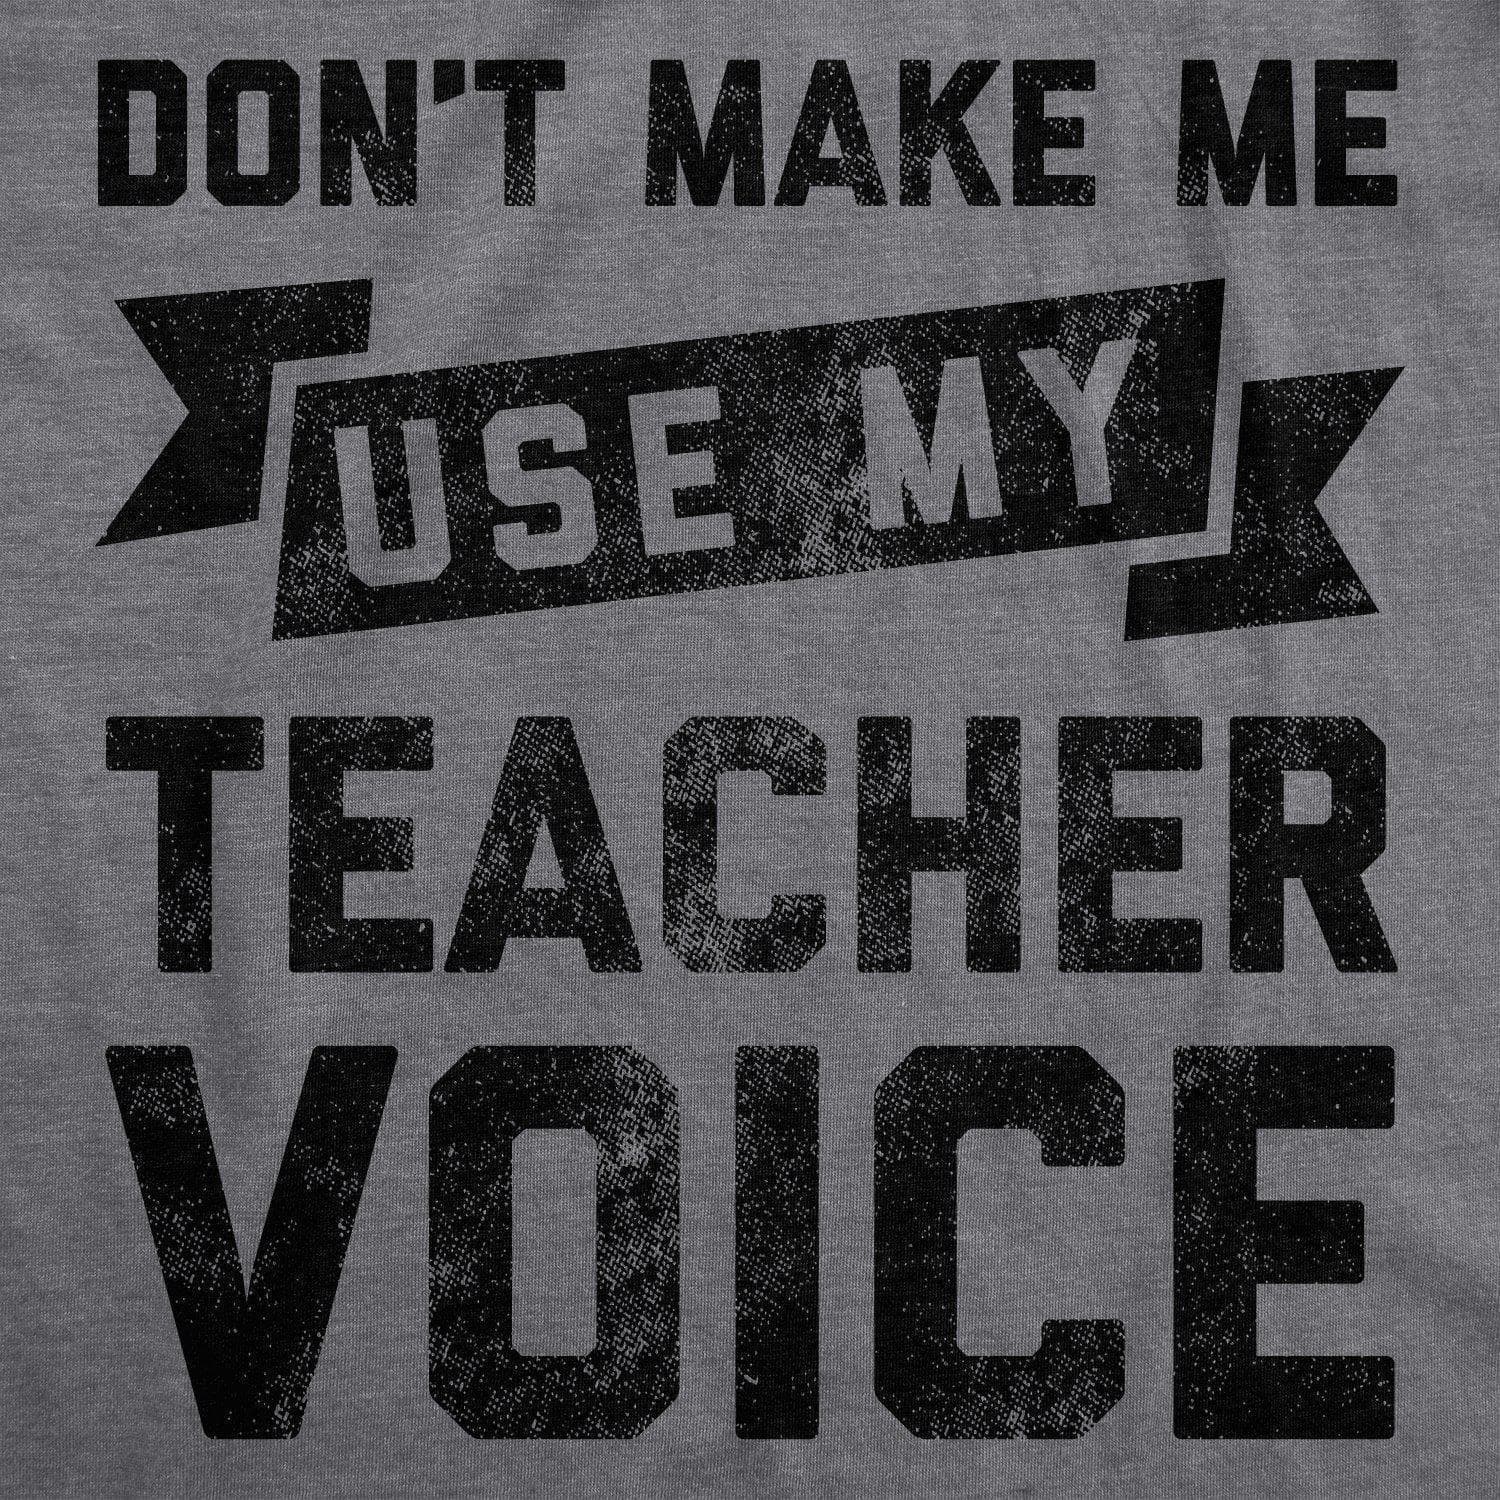 Don't Make Me Use My Teacher Voice Women's Tshirt - Crazy Dog T-Shirts